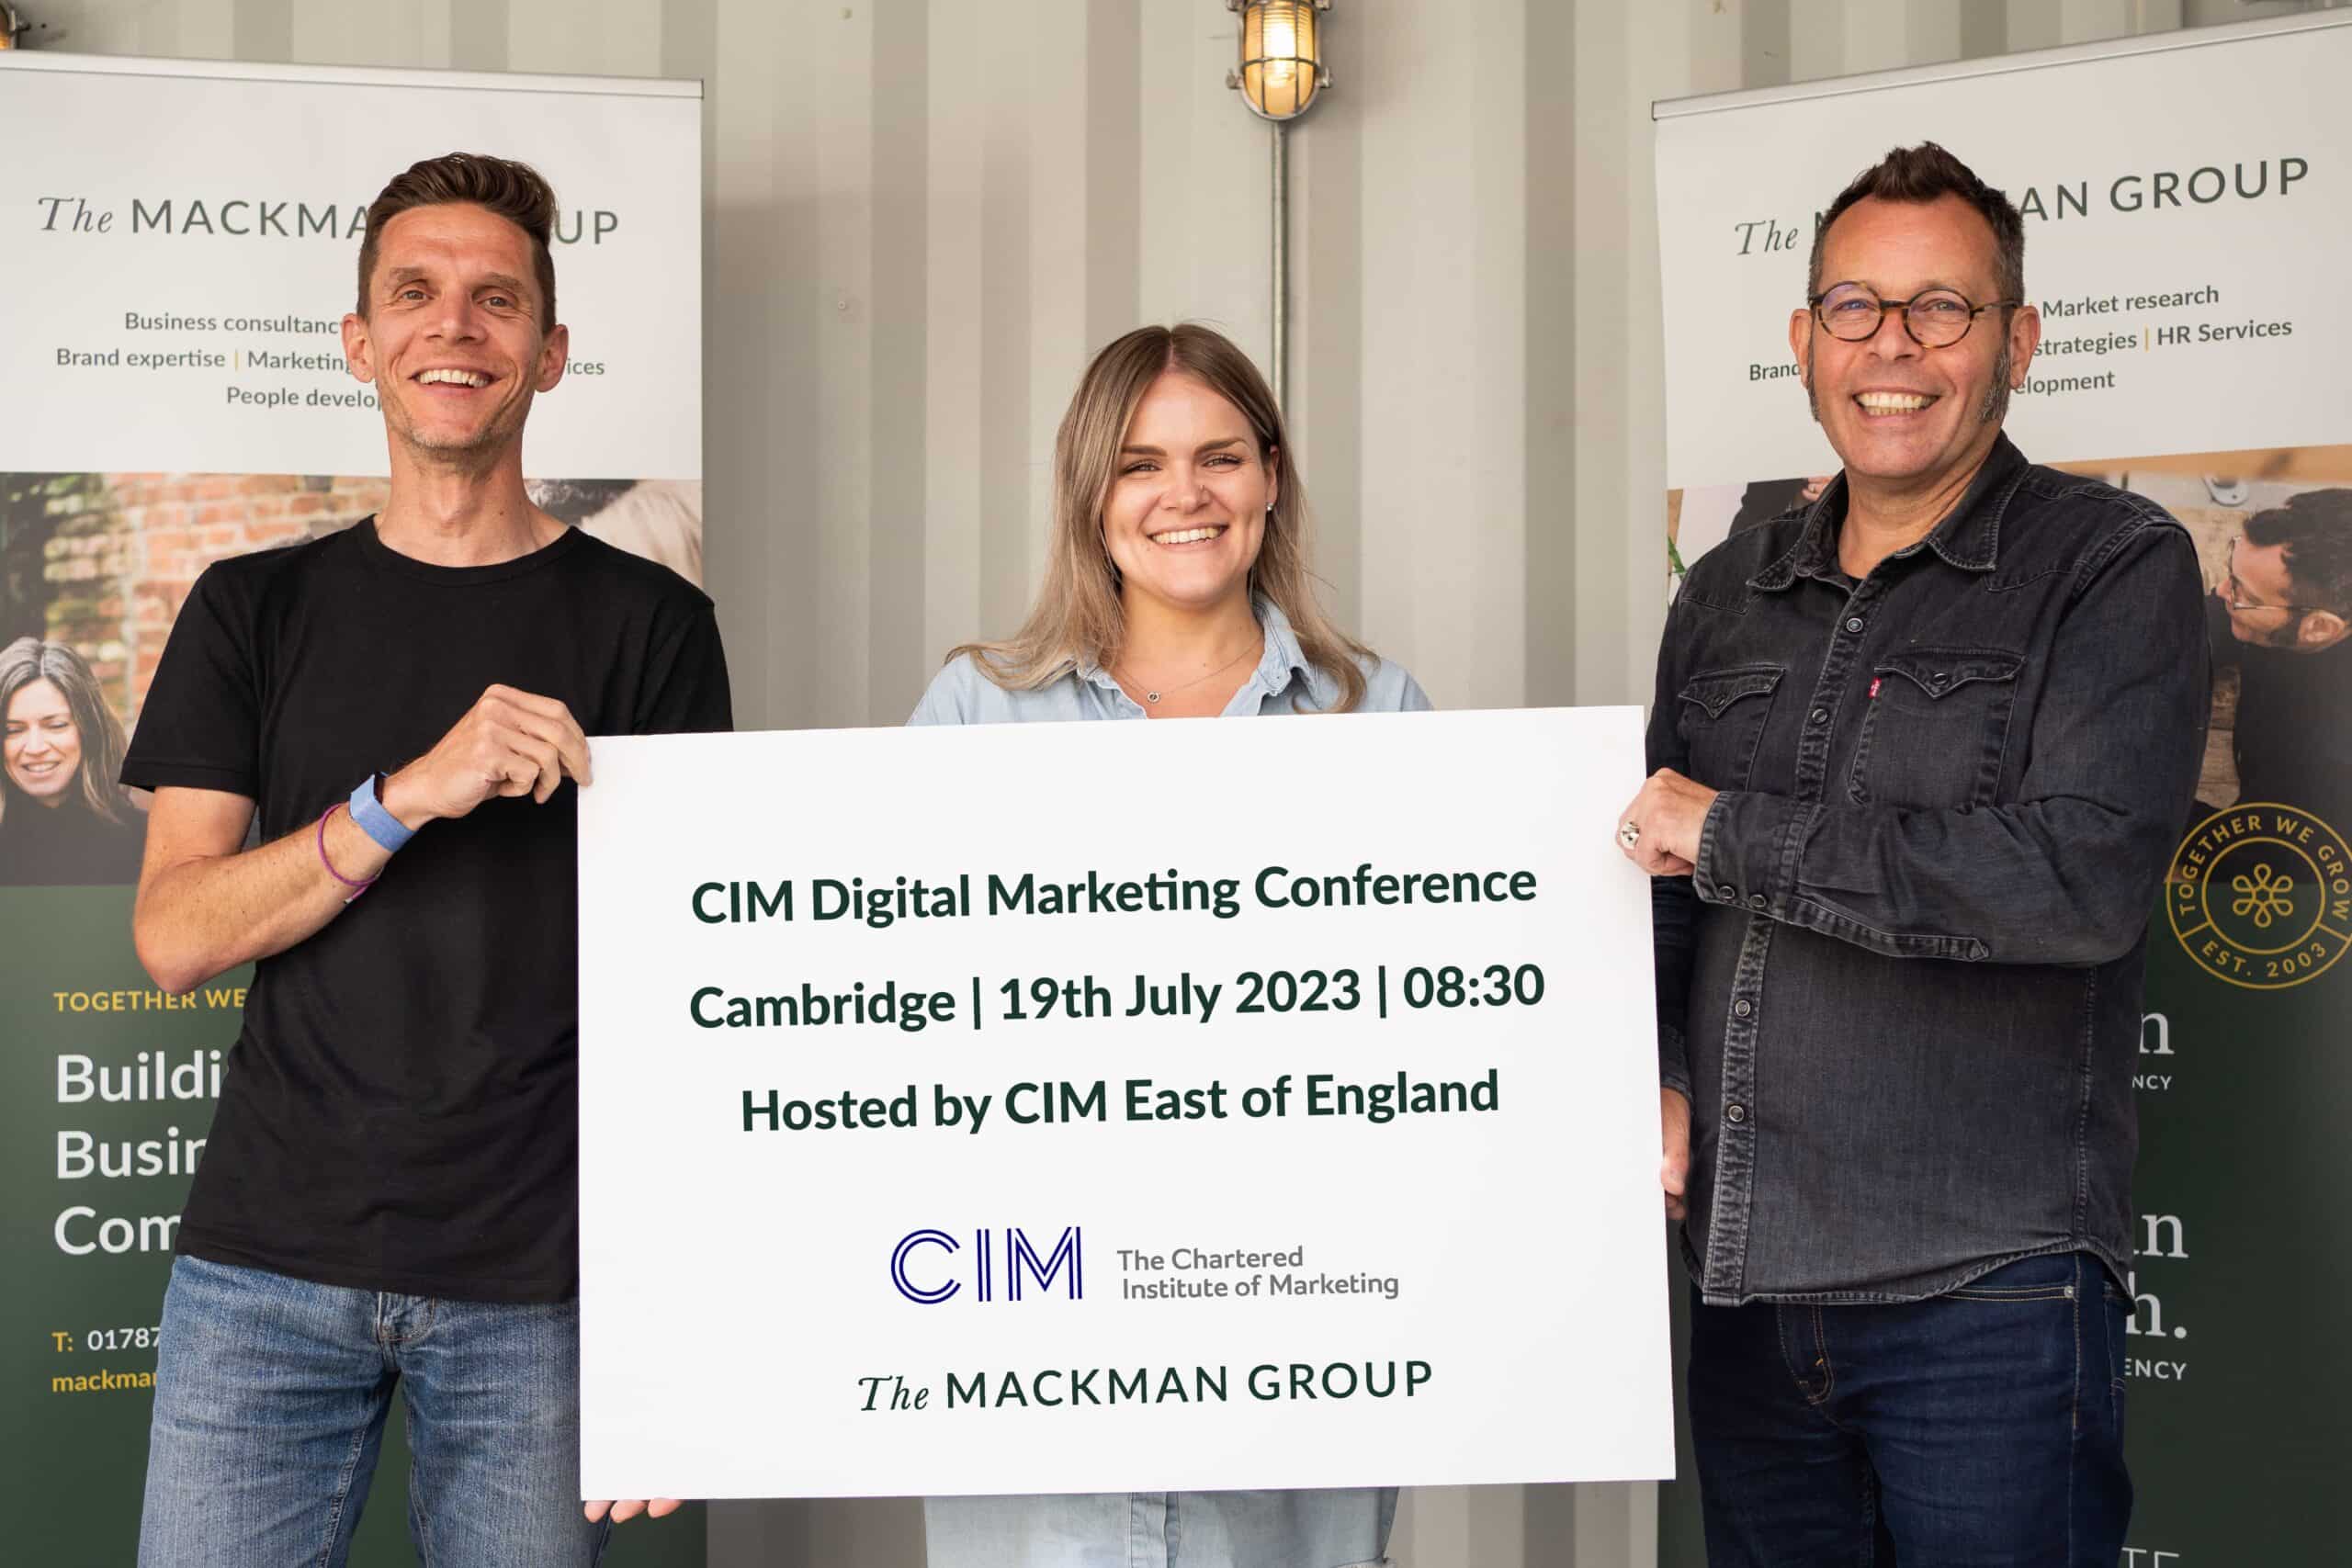 Sponsors of the CIM Digital Marketing Conference 2023